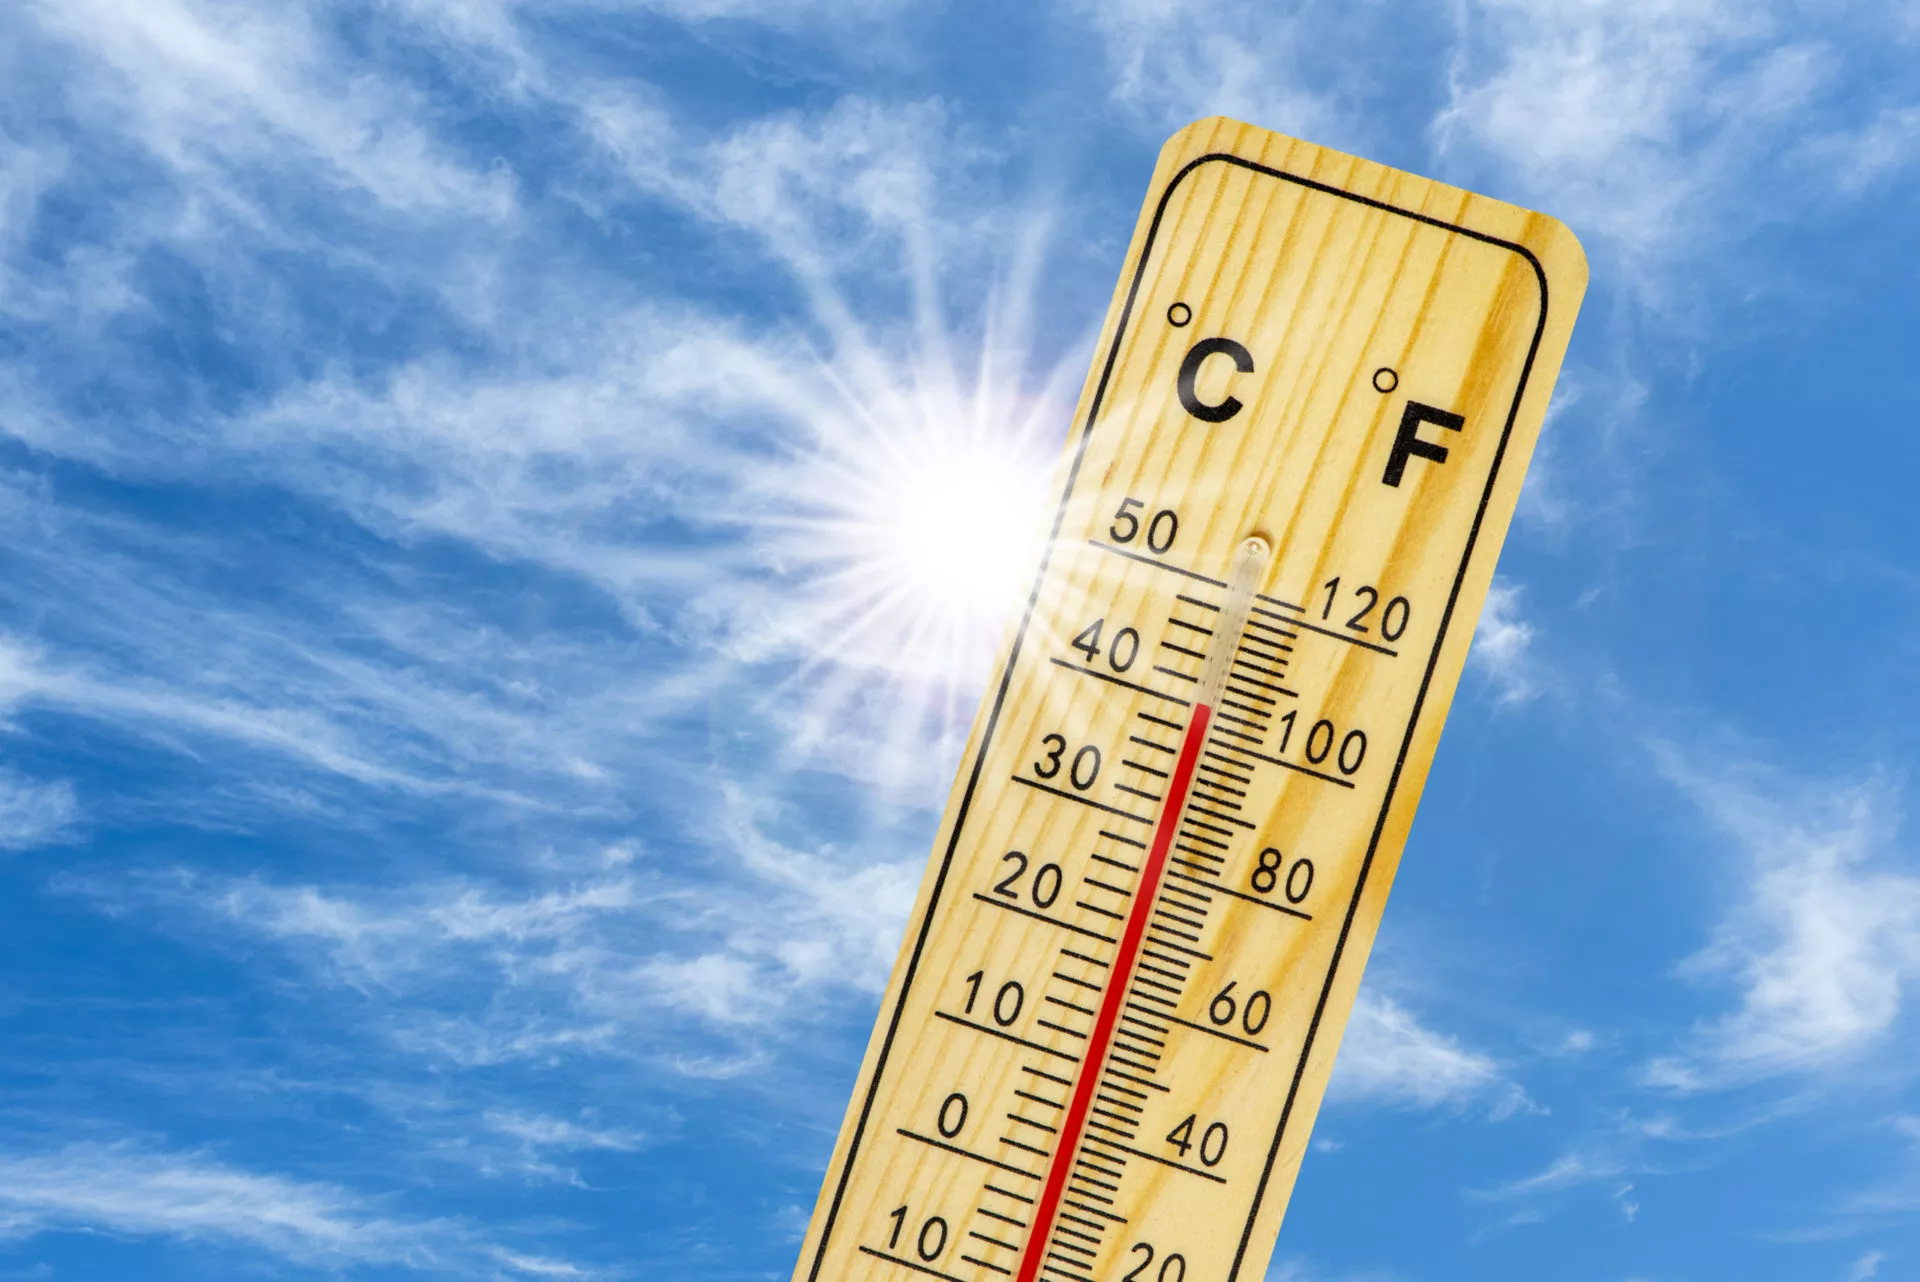 Hitze und Thermometer